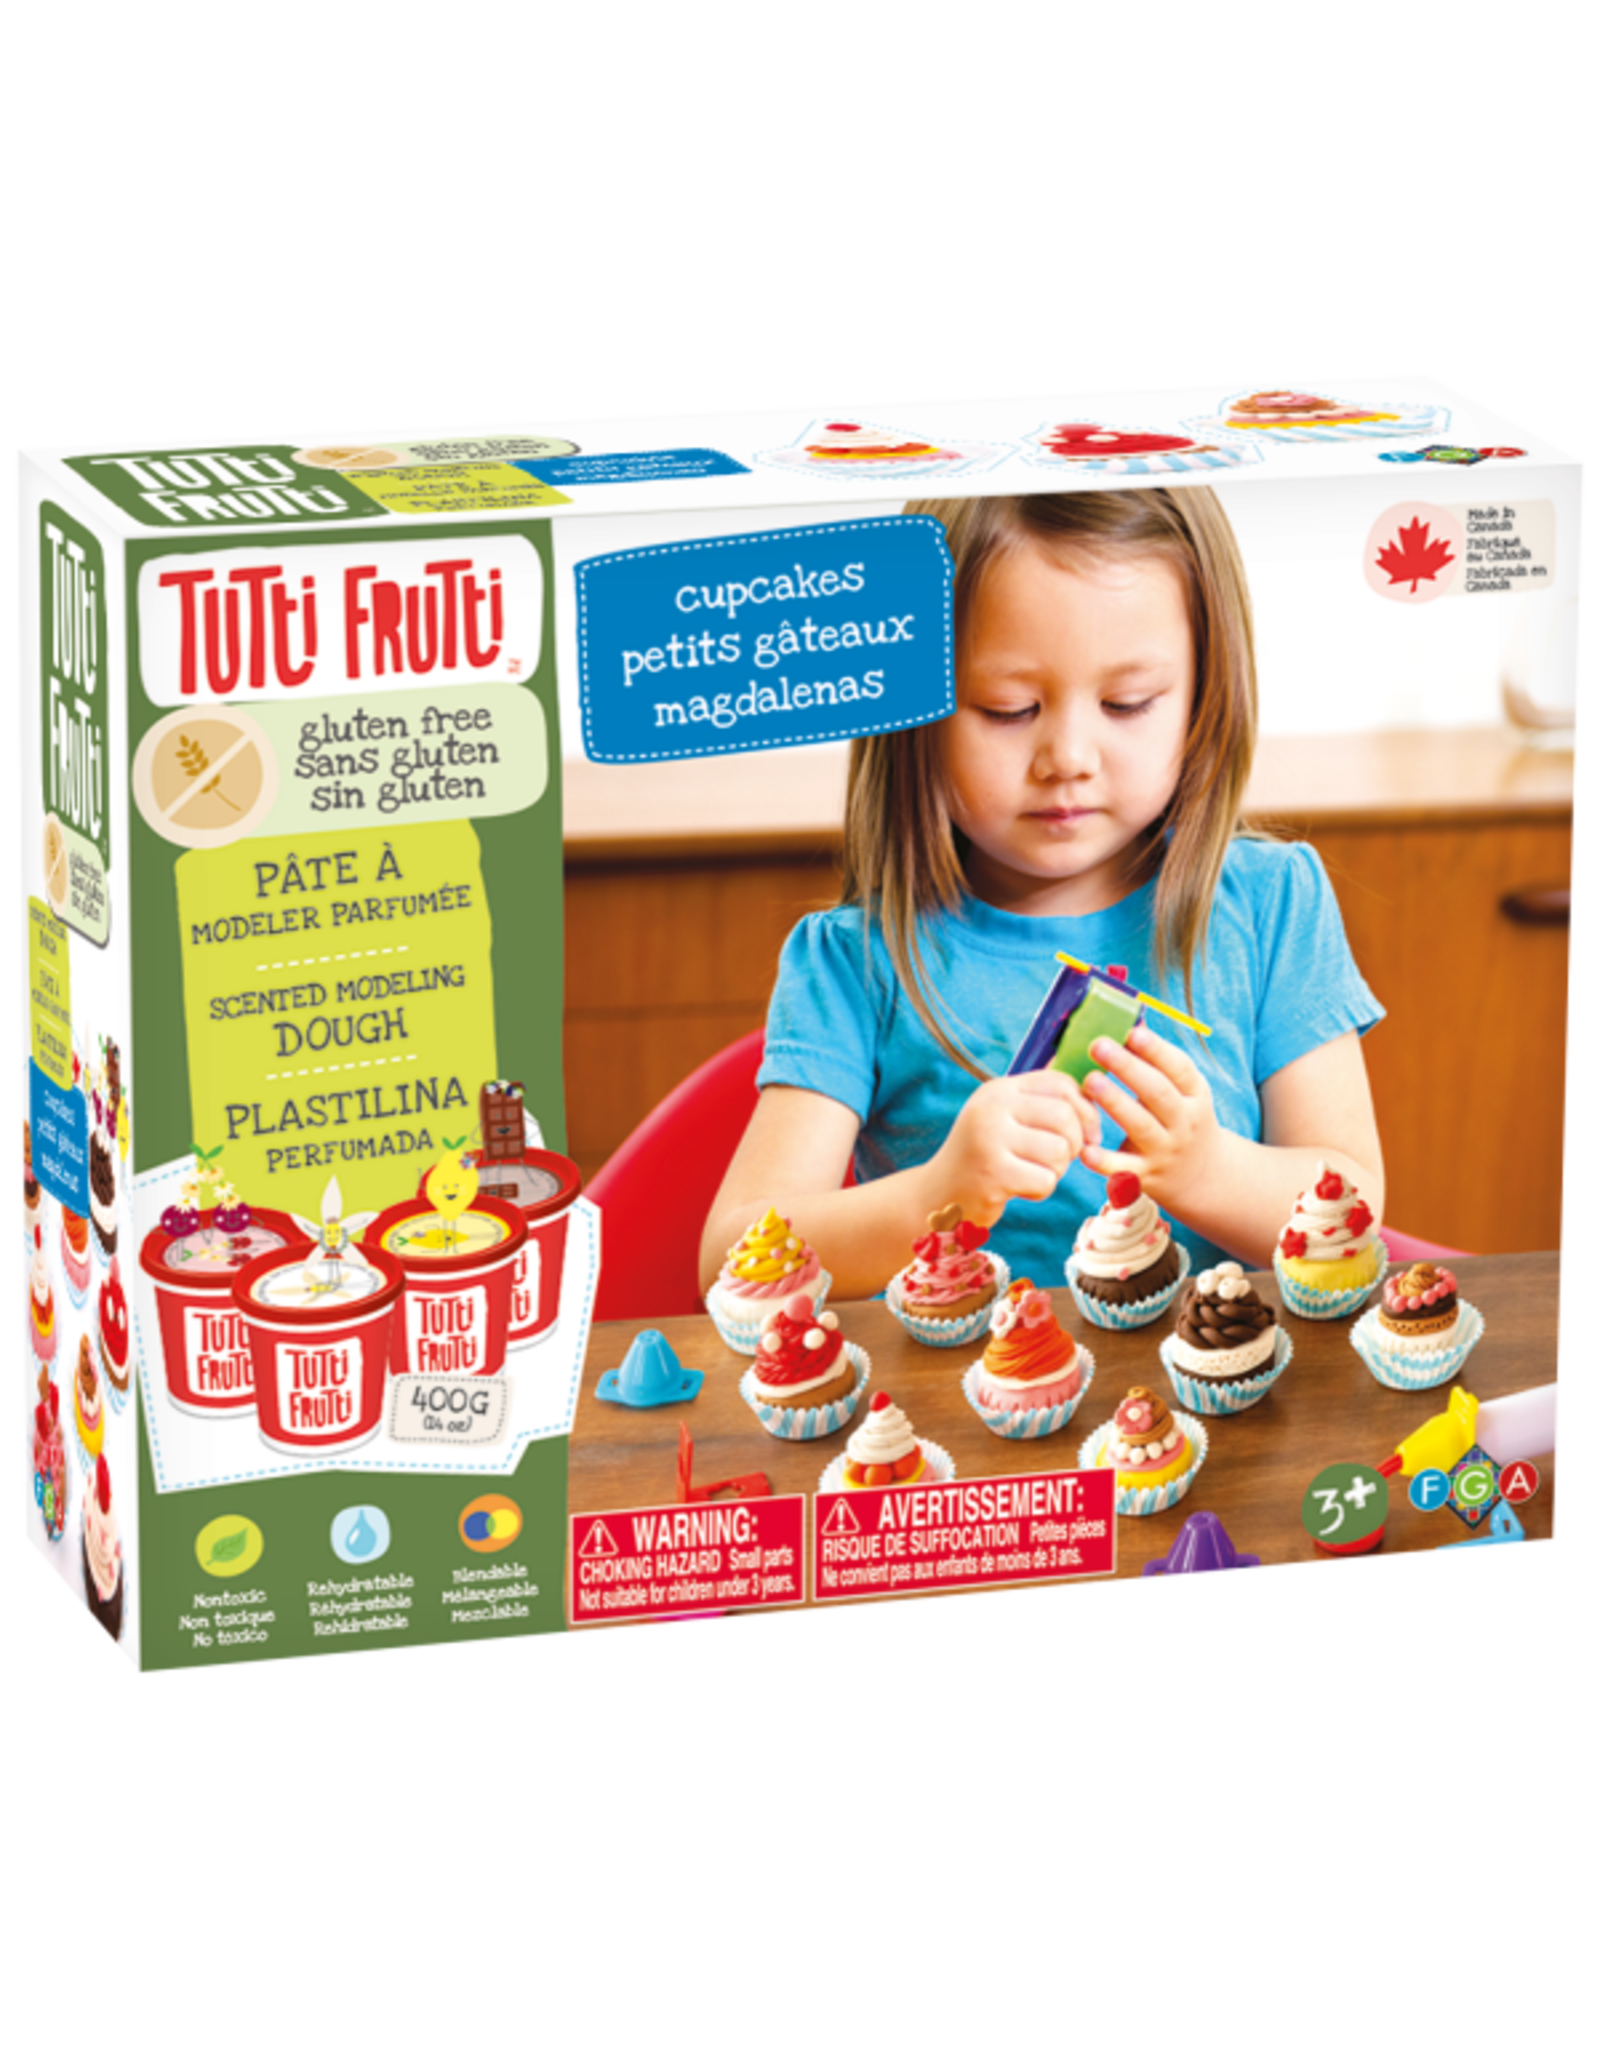 Tutti Frutti Tutti Frutti Cupcakes Kit - Gluten Free